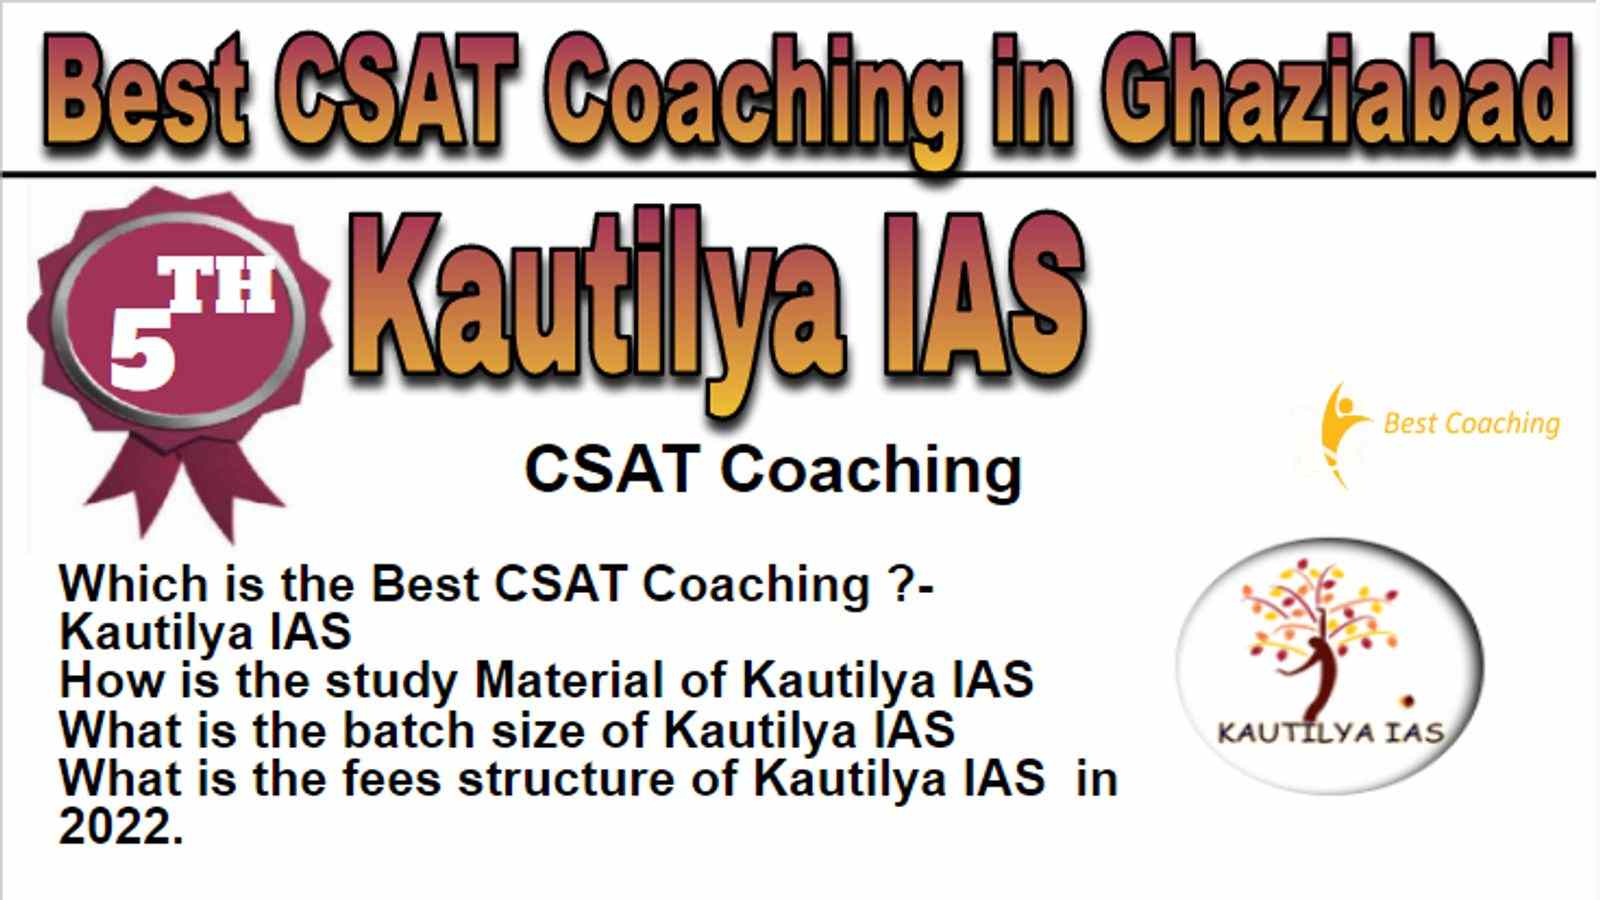 Rank 5 Best CSAT Coaching in Ghaziabad